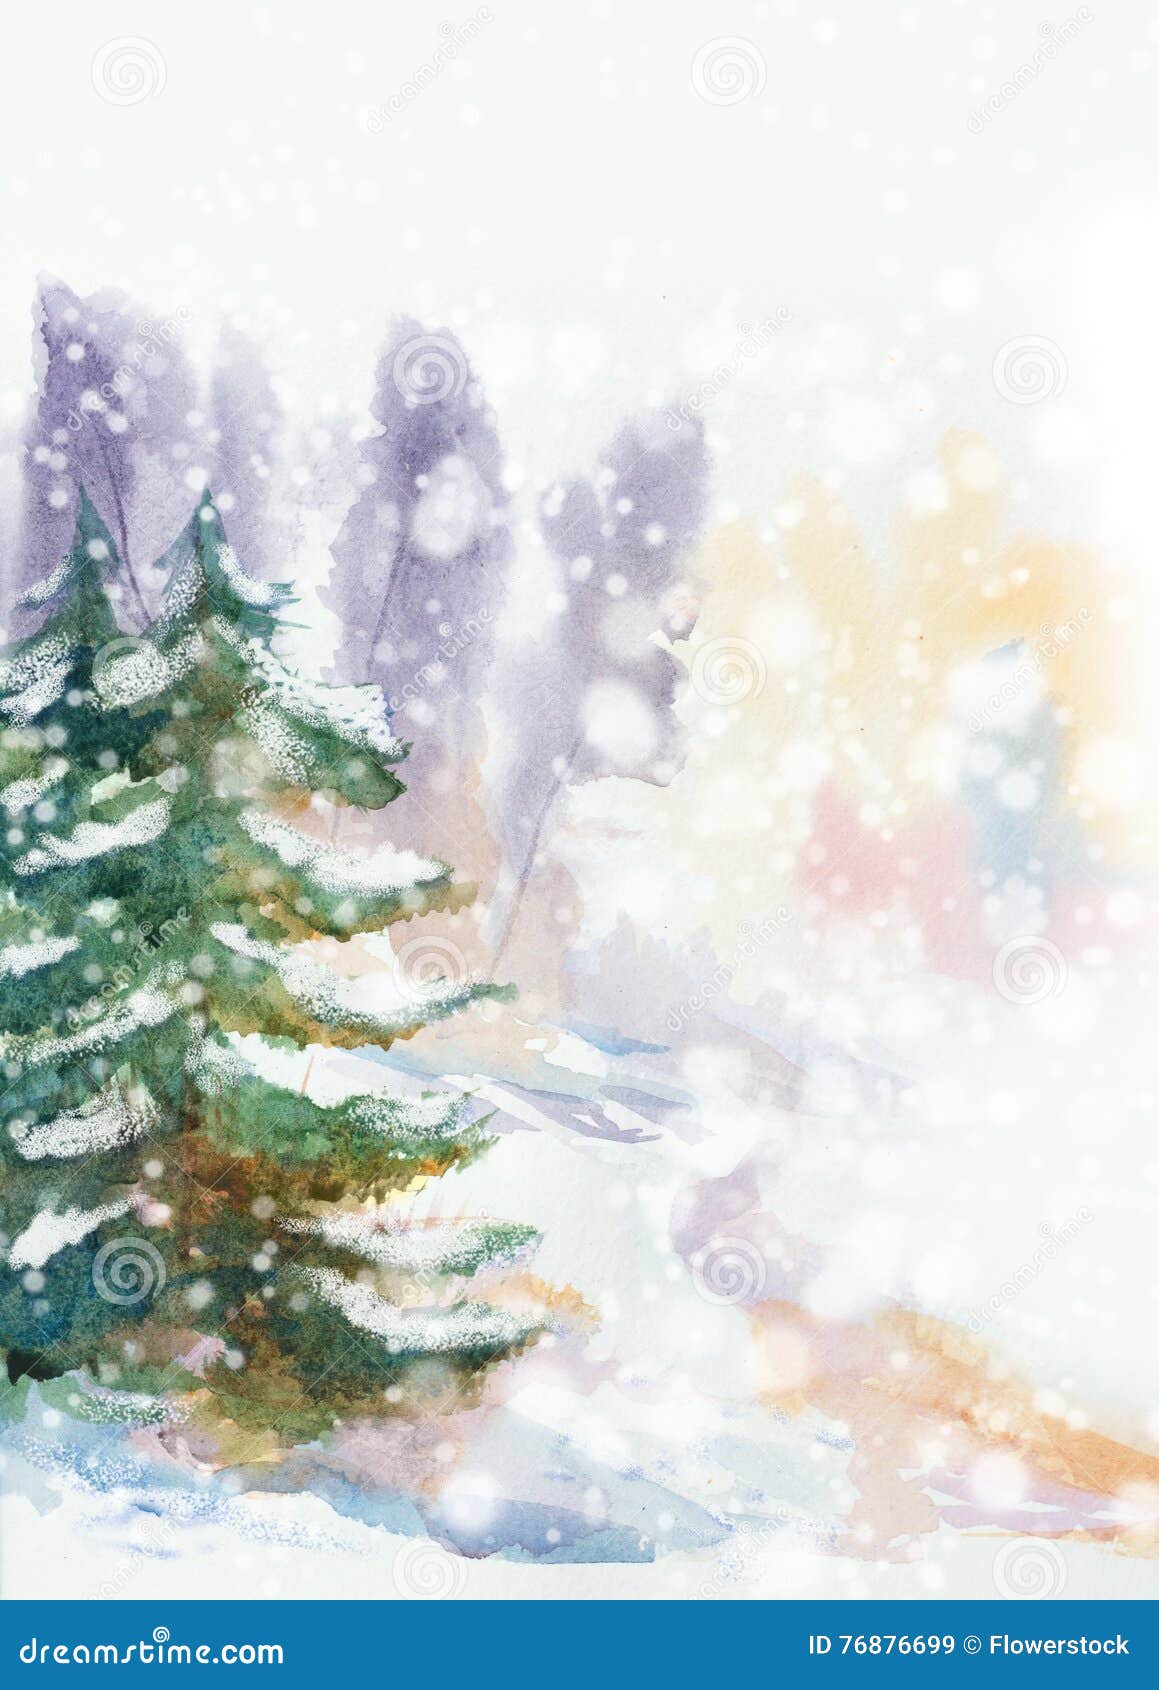 Snowy Winter Background Stock Illustration. Illustration Of Blue - 76876699